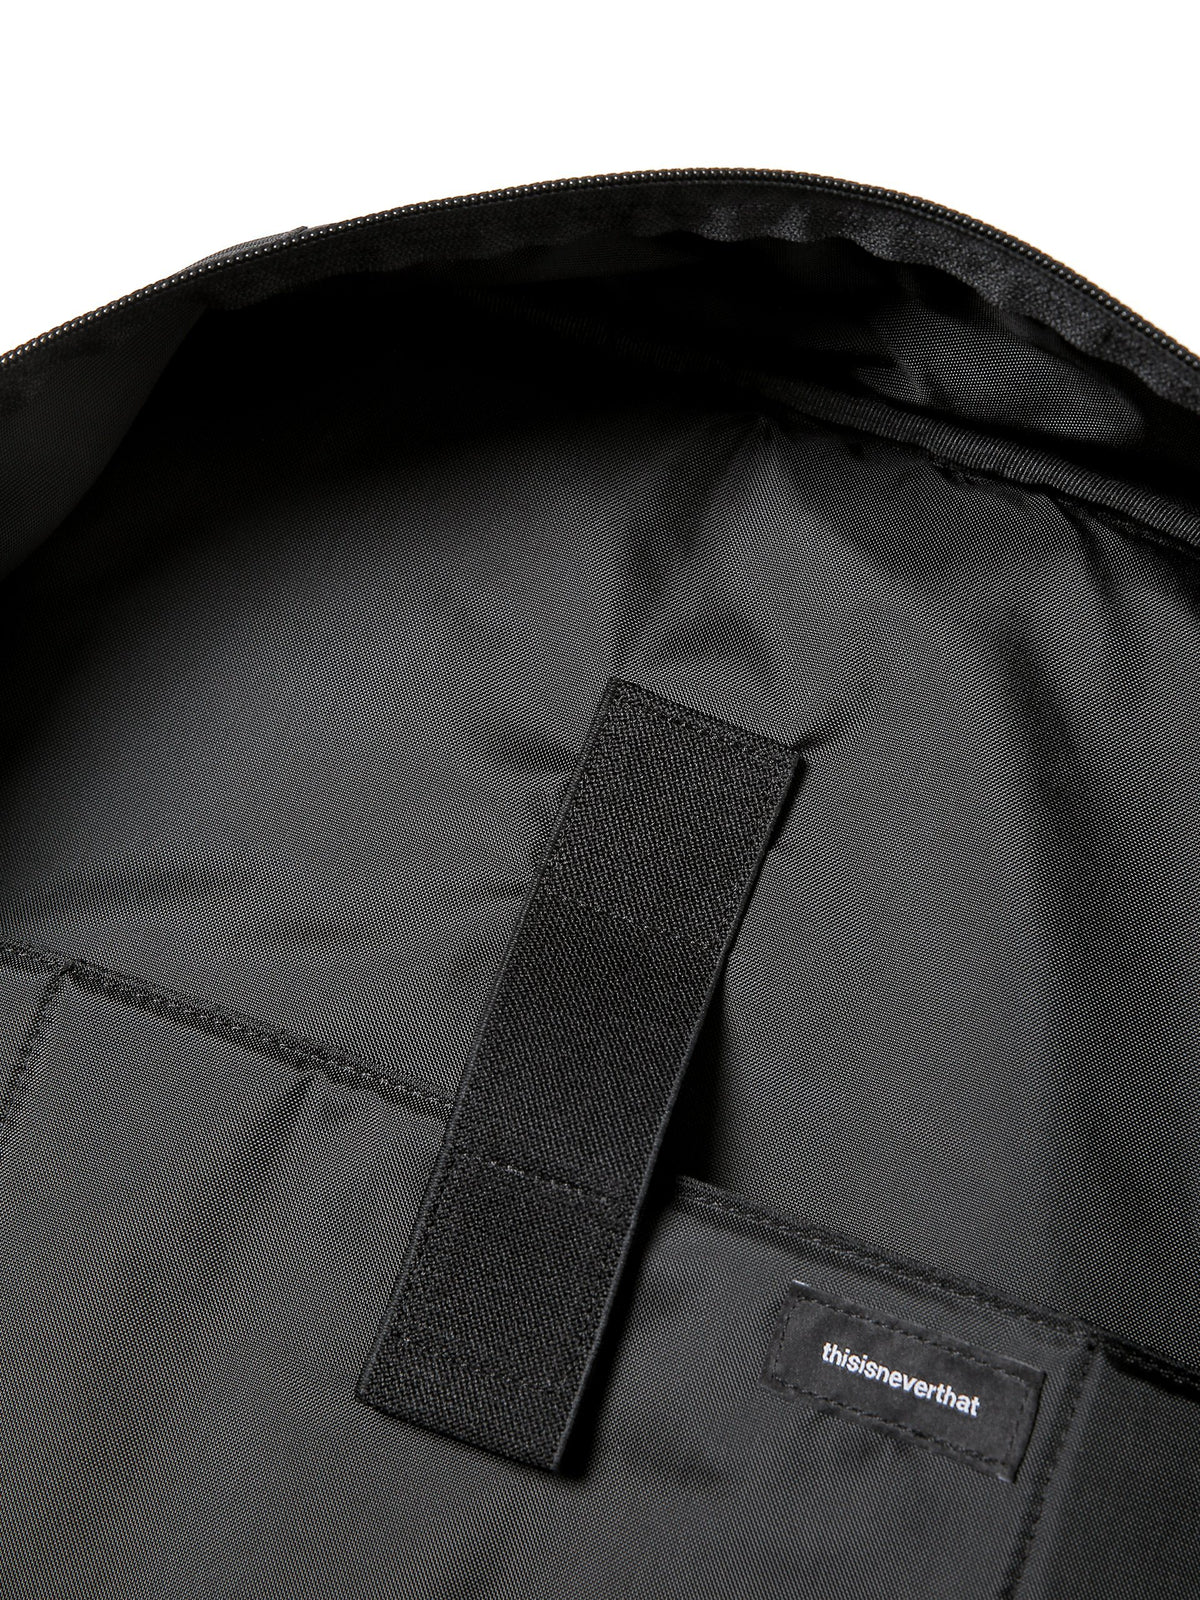 SFX 27 Backpack Bag